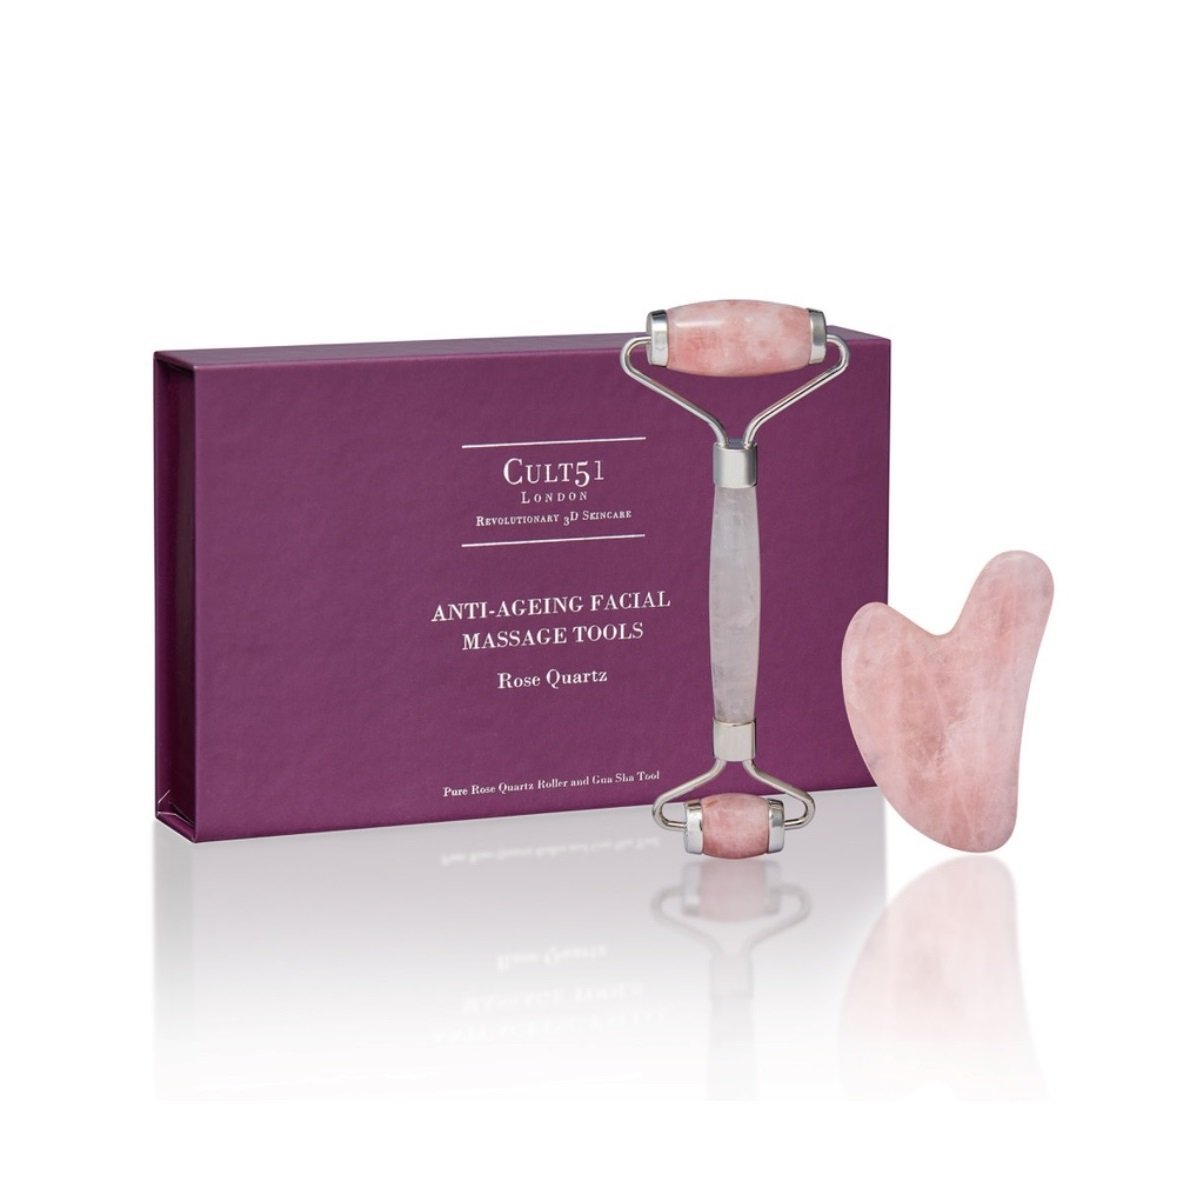 CULT 51 Rose Quartz Anti-Ageing Facial Massage Tools 天然玫瑰石英雙頭按摩滾輪+刮痧板套裝 - MINT Organics